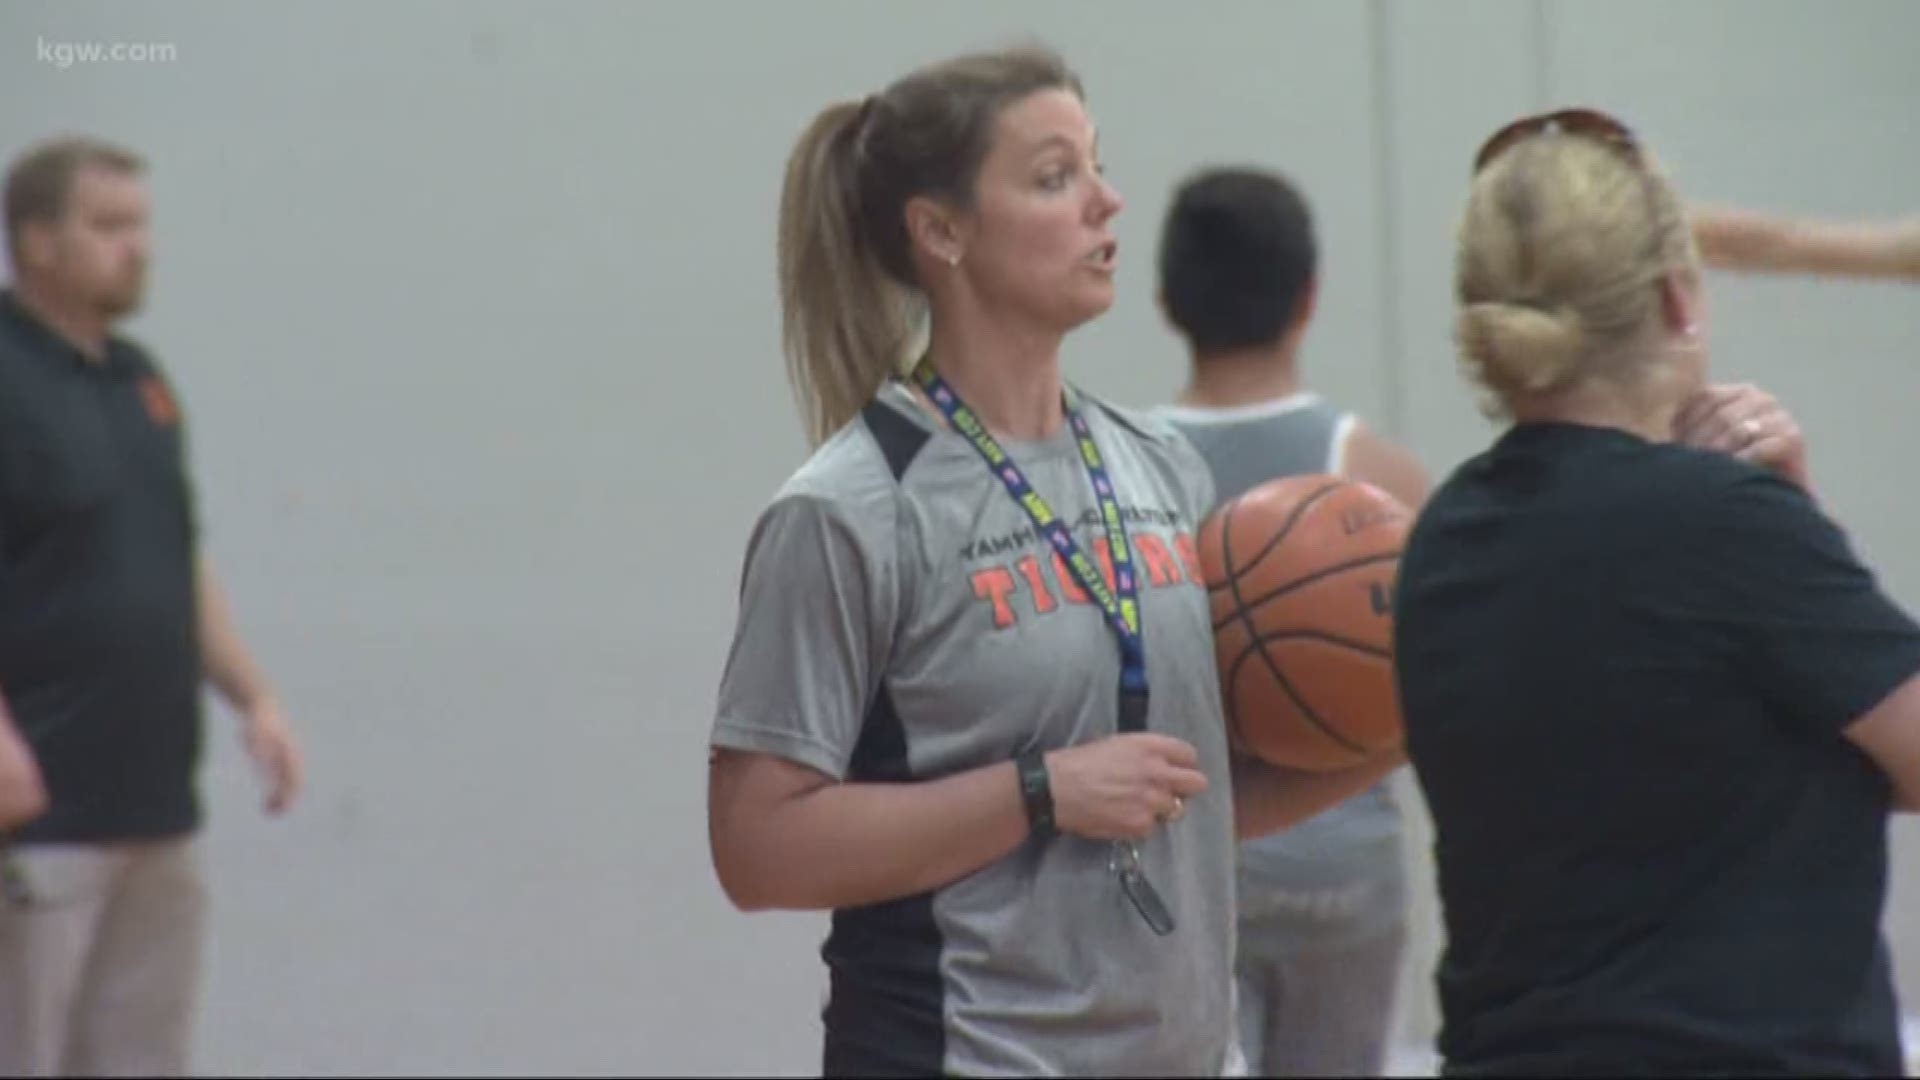 Female coach to lead boys basketball team